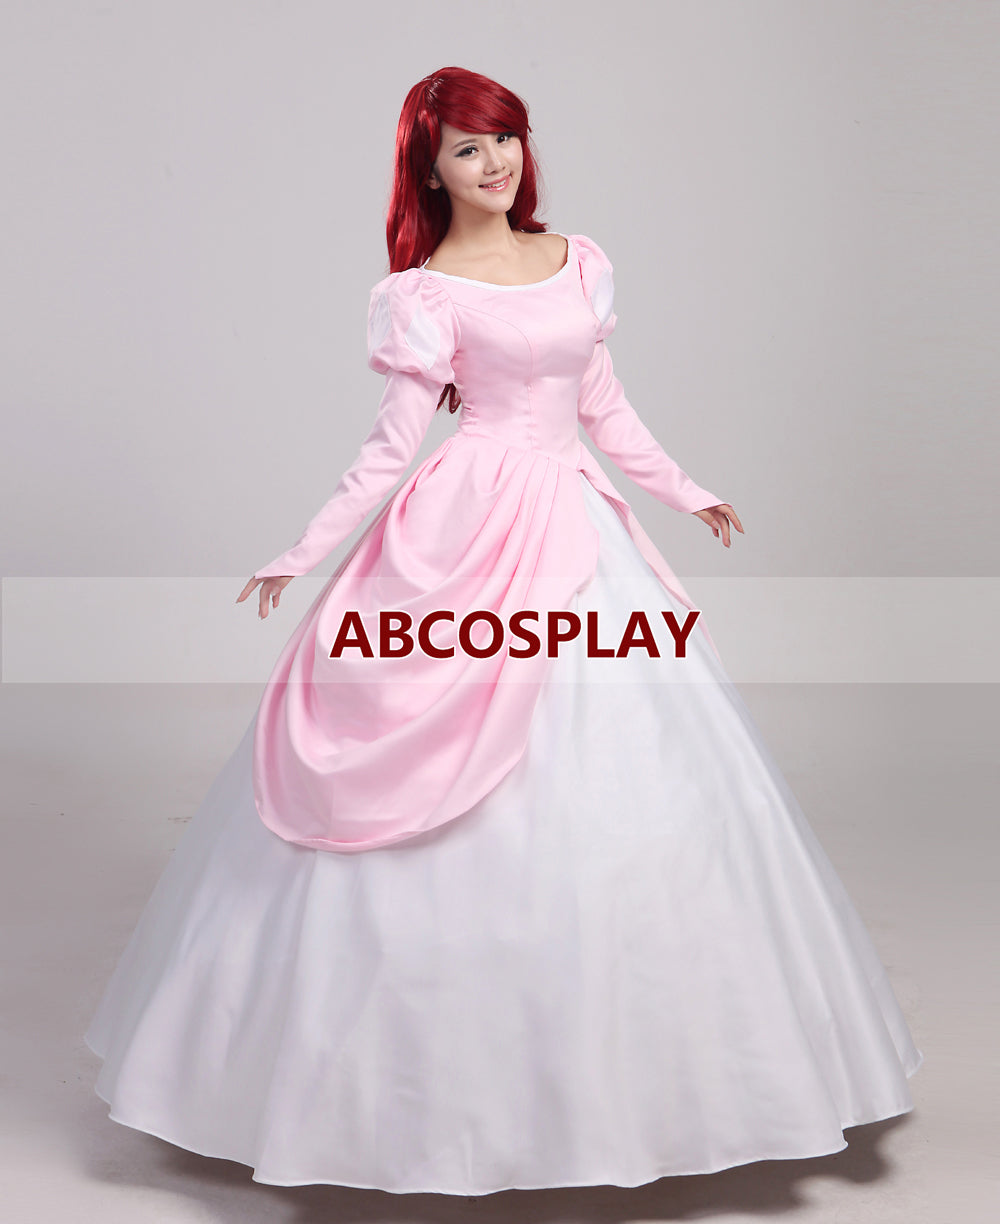 The Little Mermaid Ariel Princess Dress Pink Cosplay Costume